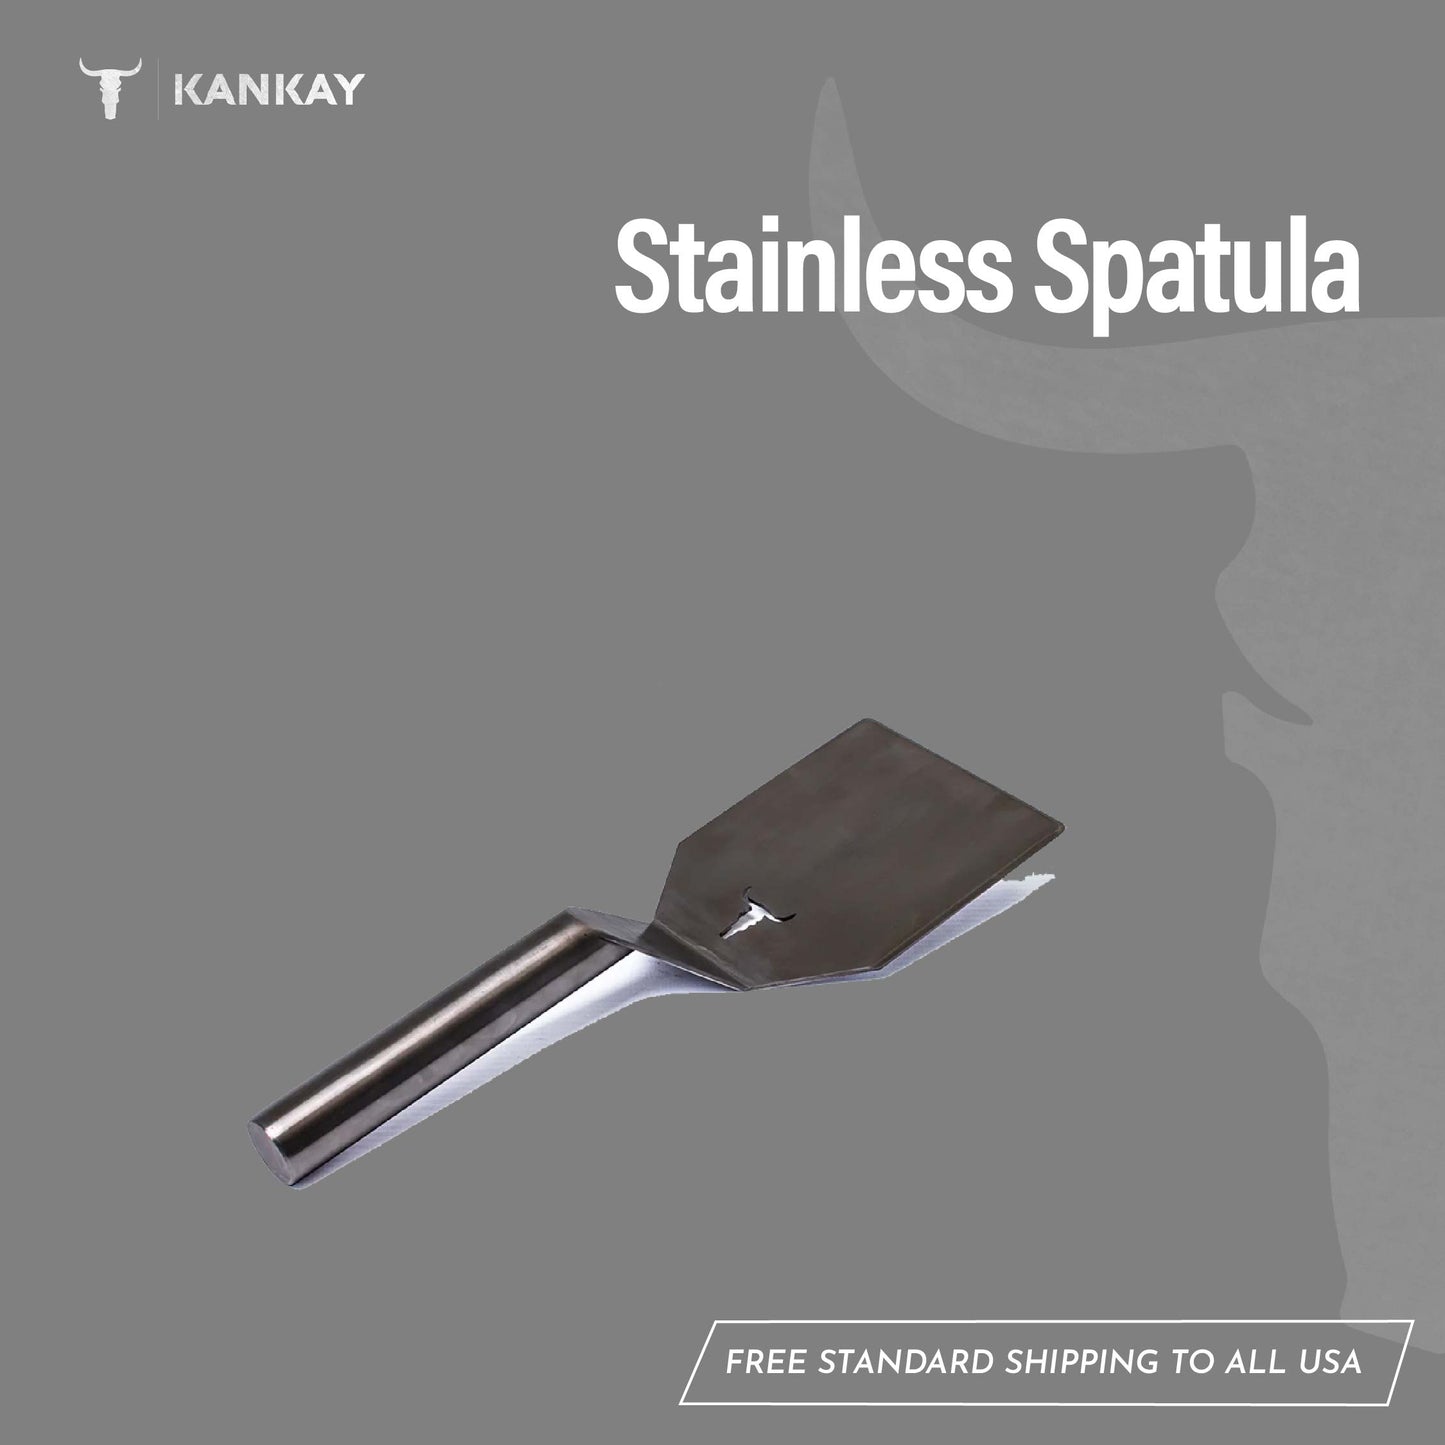 Stainless Spatula